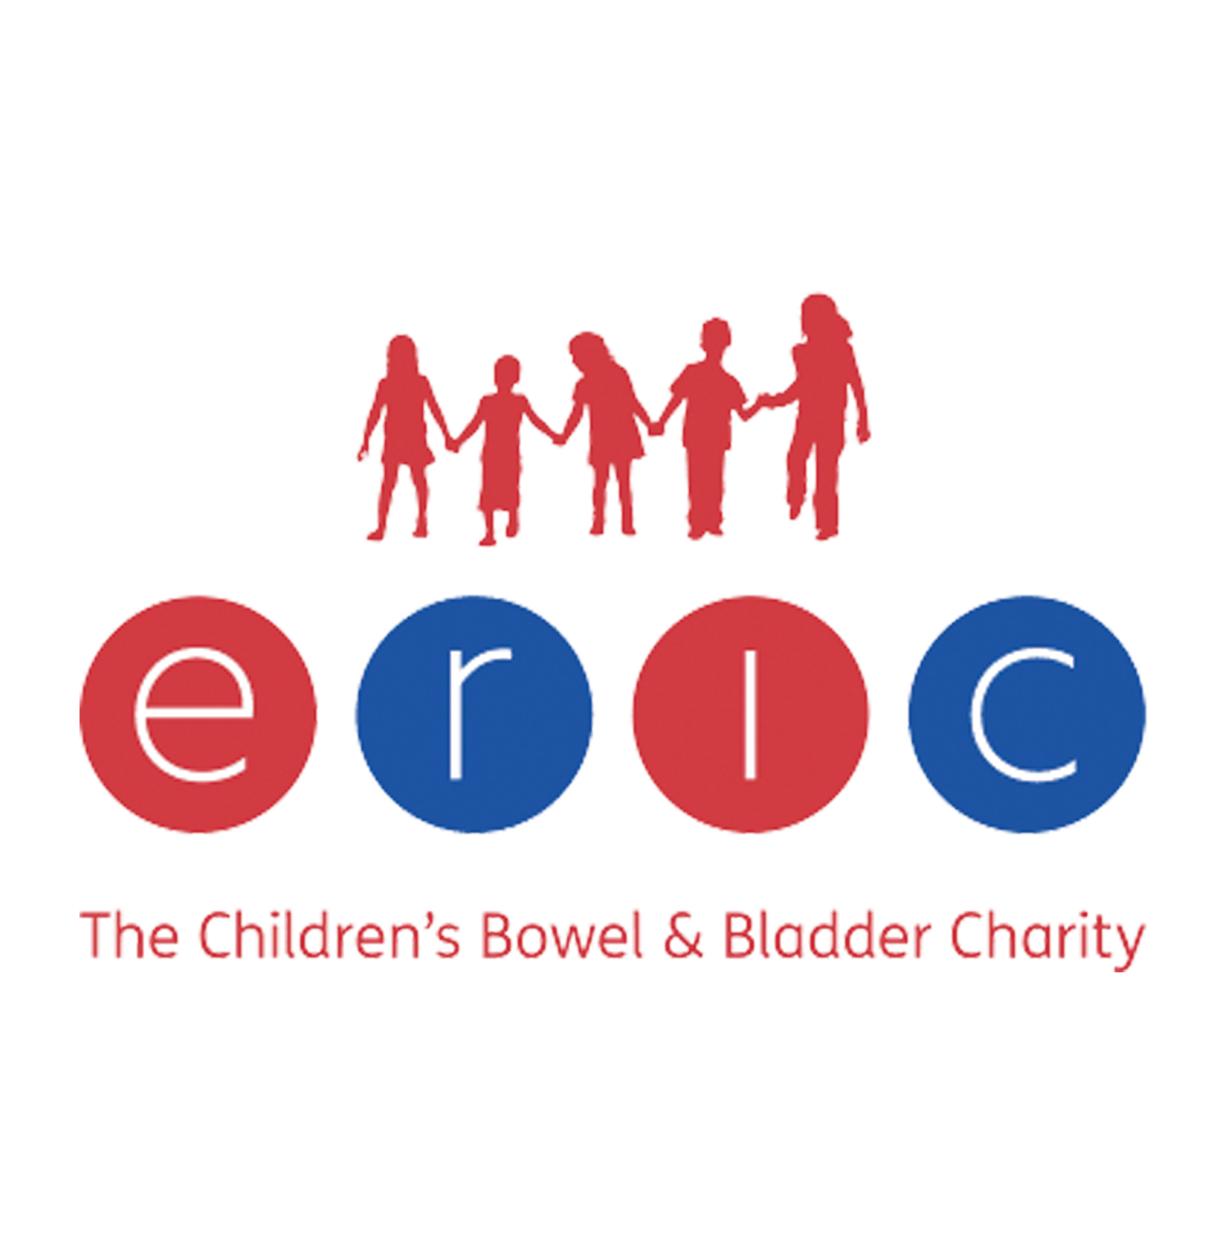 ERIC Charity logo